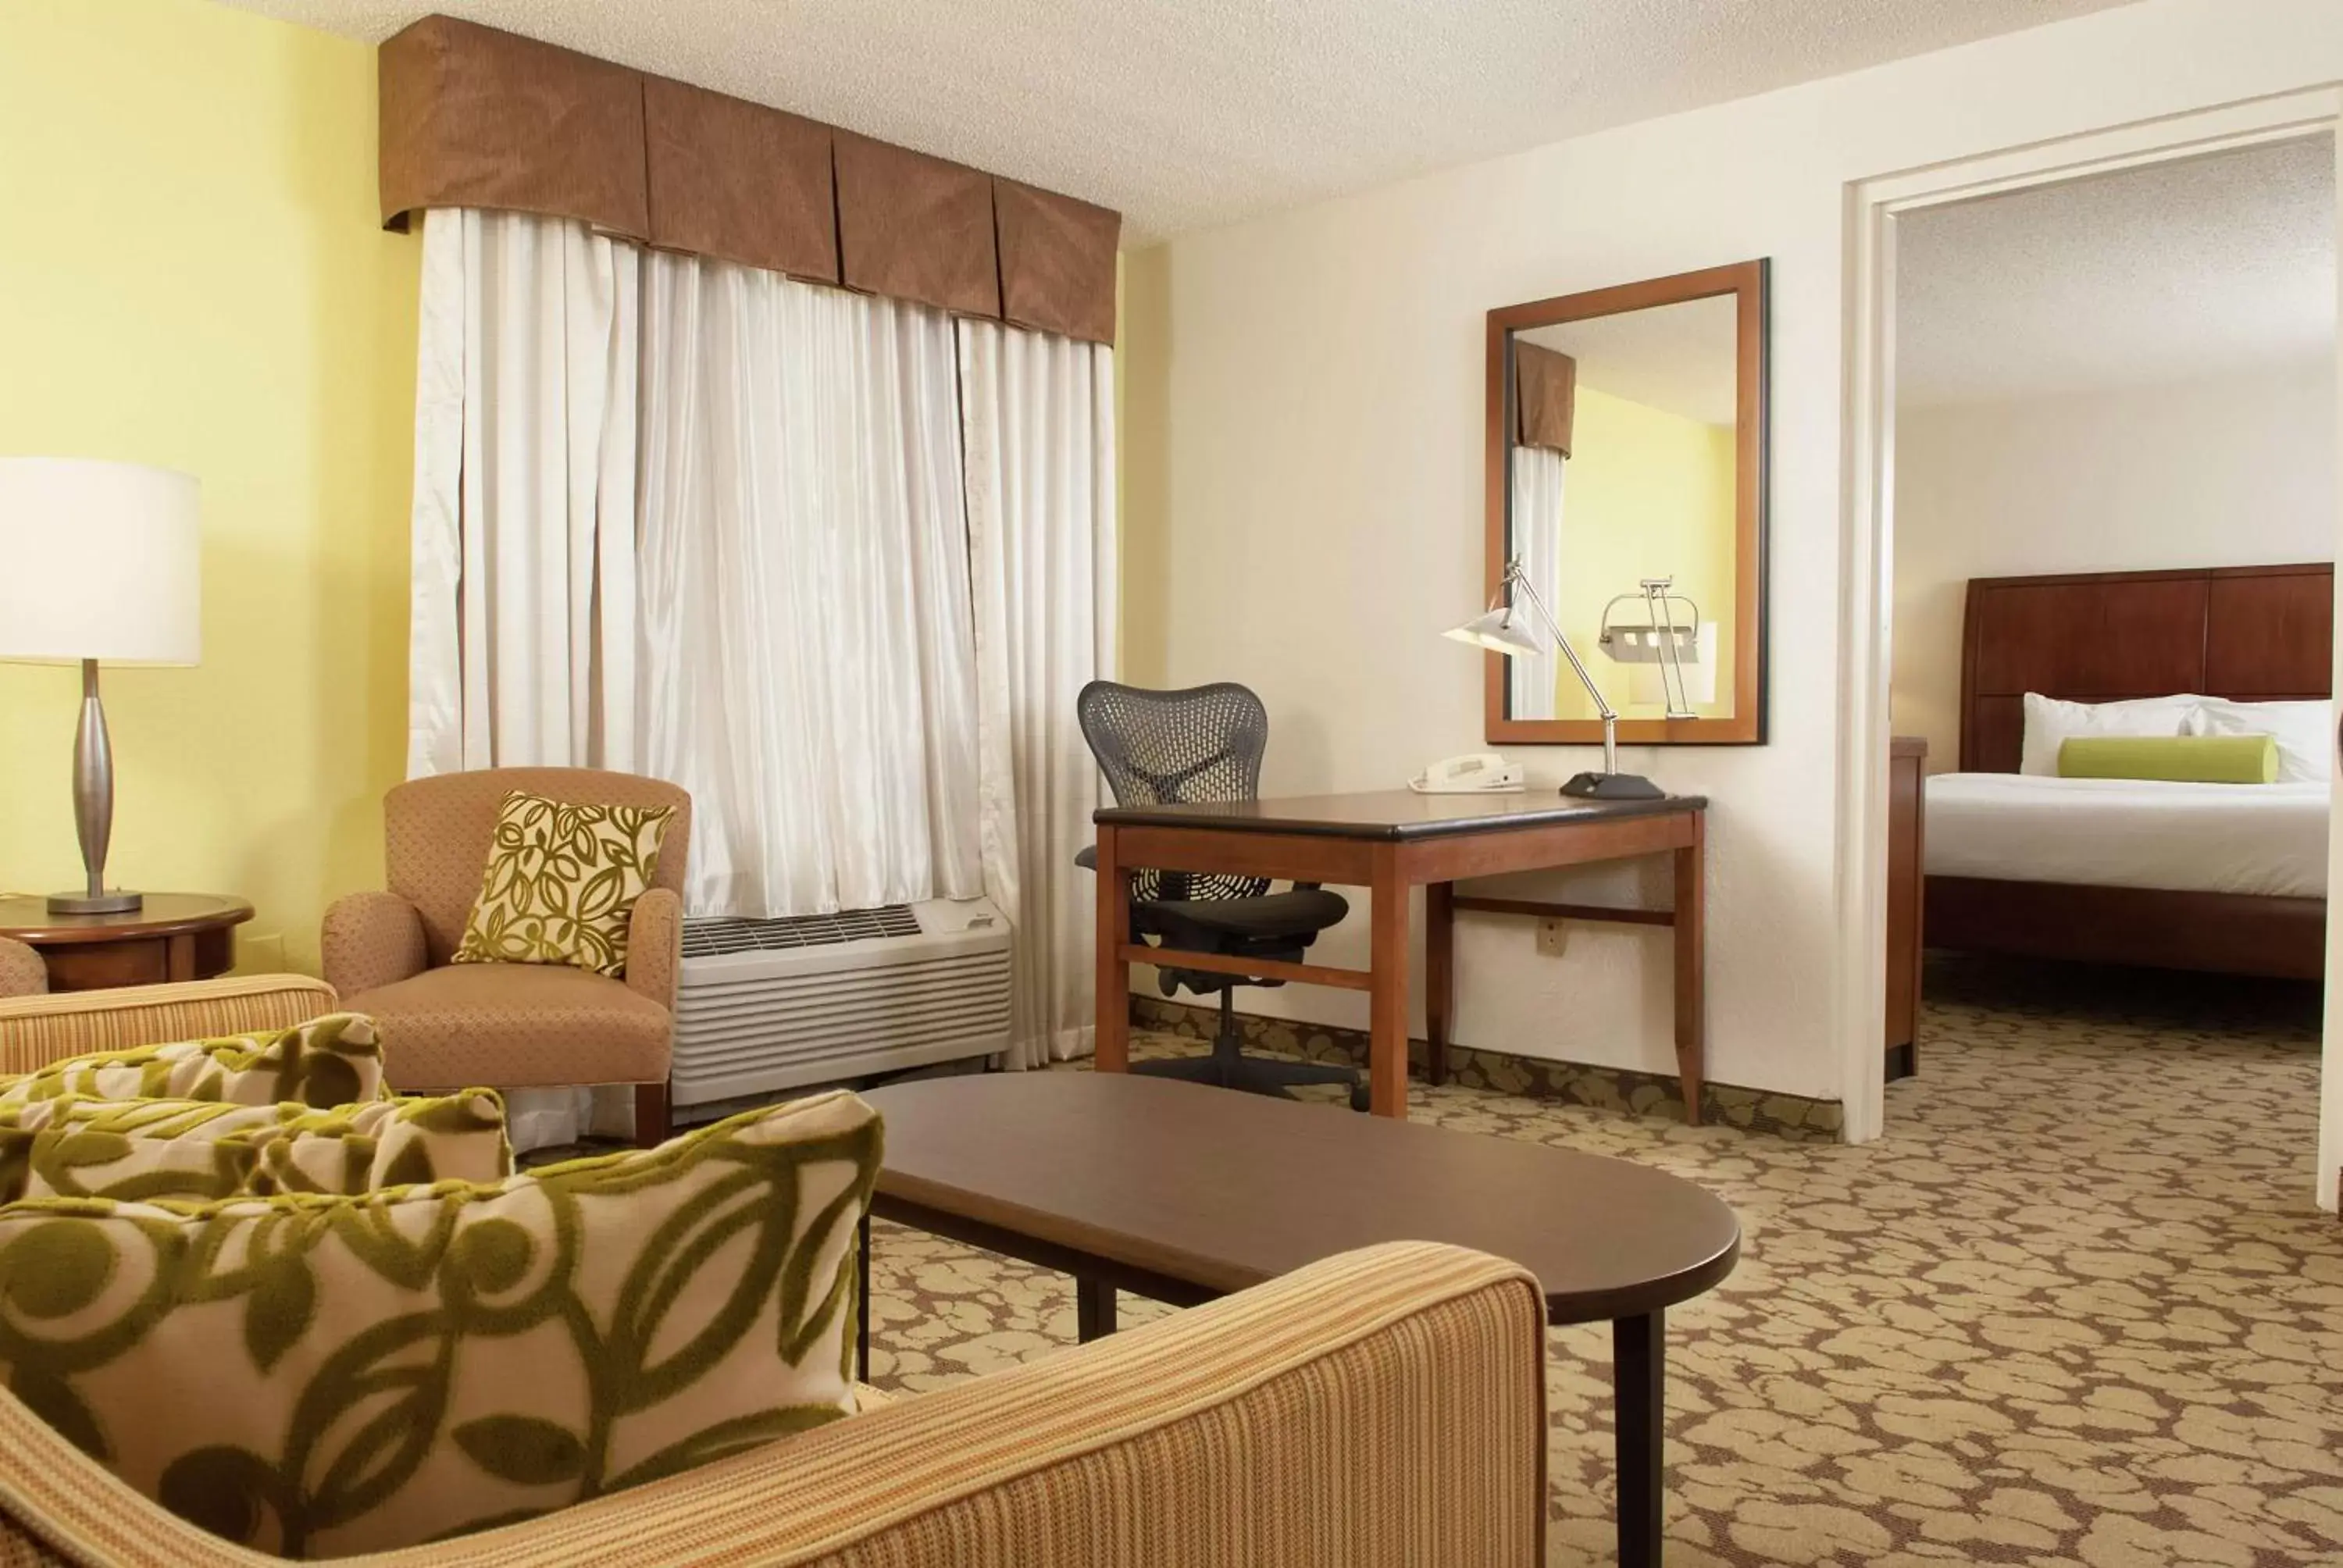 Bedroom, Seating Area in Hilton Garden Inn Orlando Airport